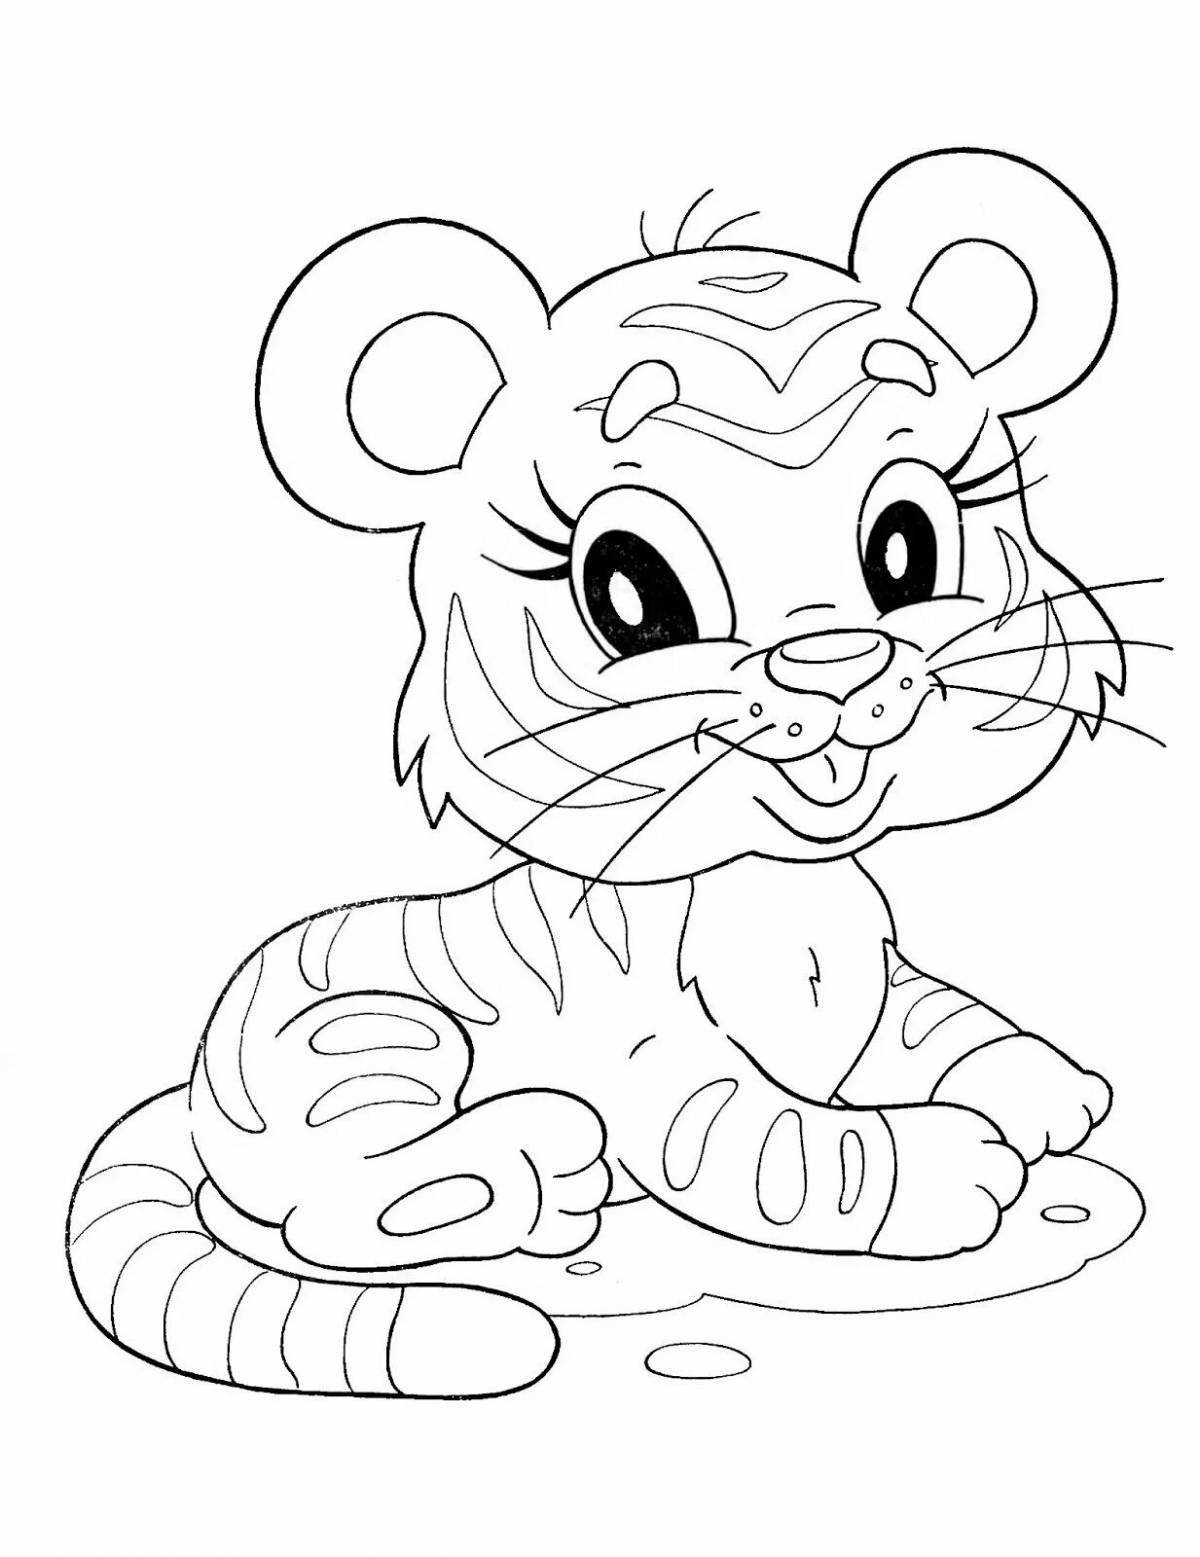 Coloring book brave tiger cub